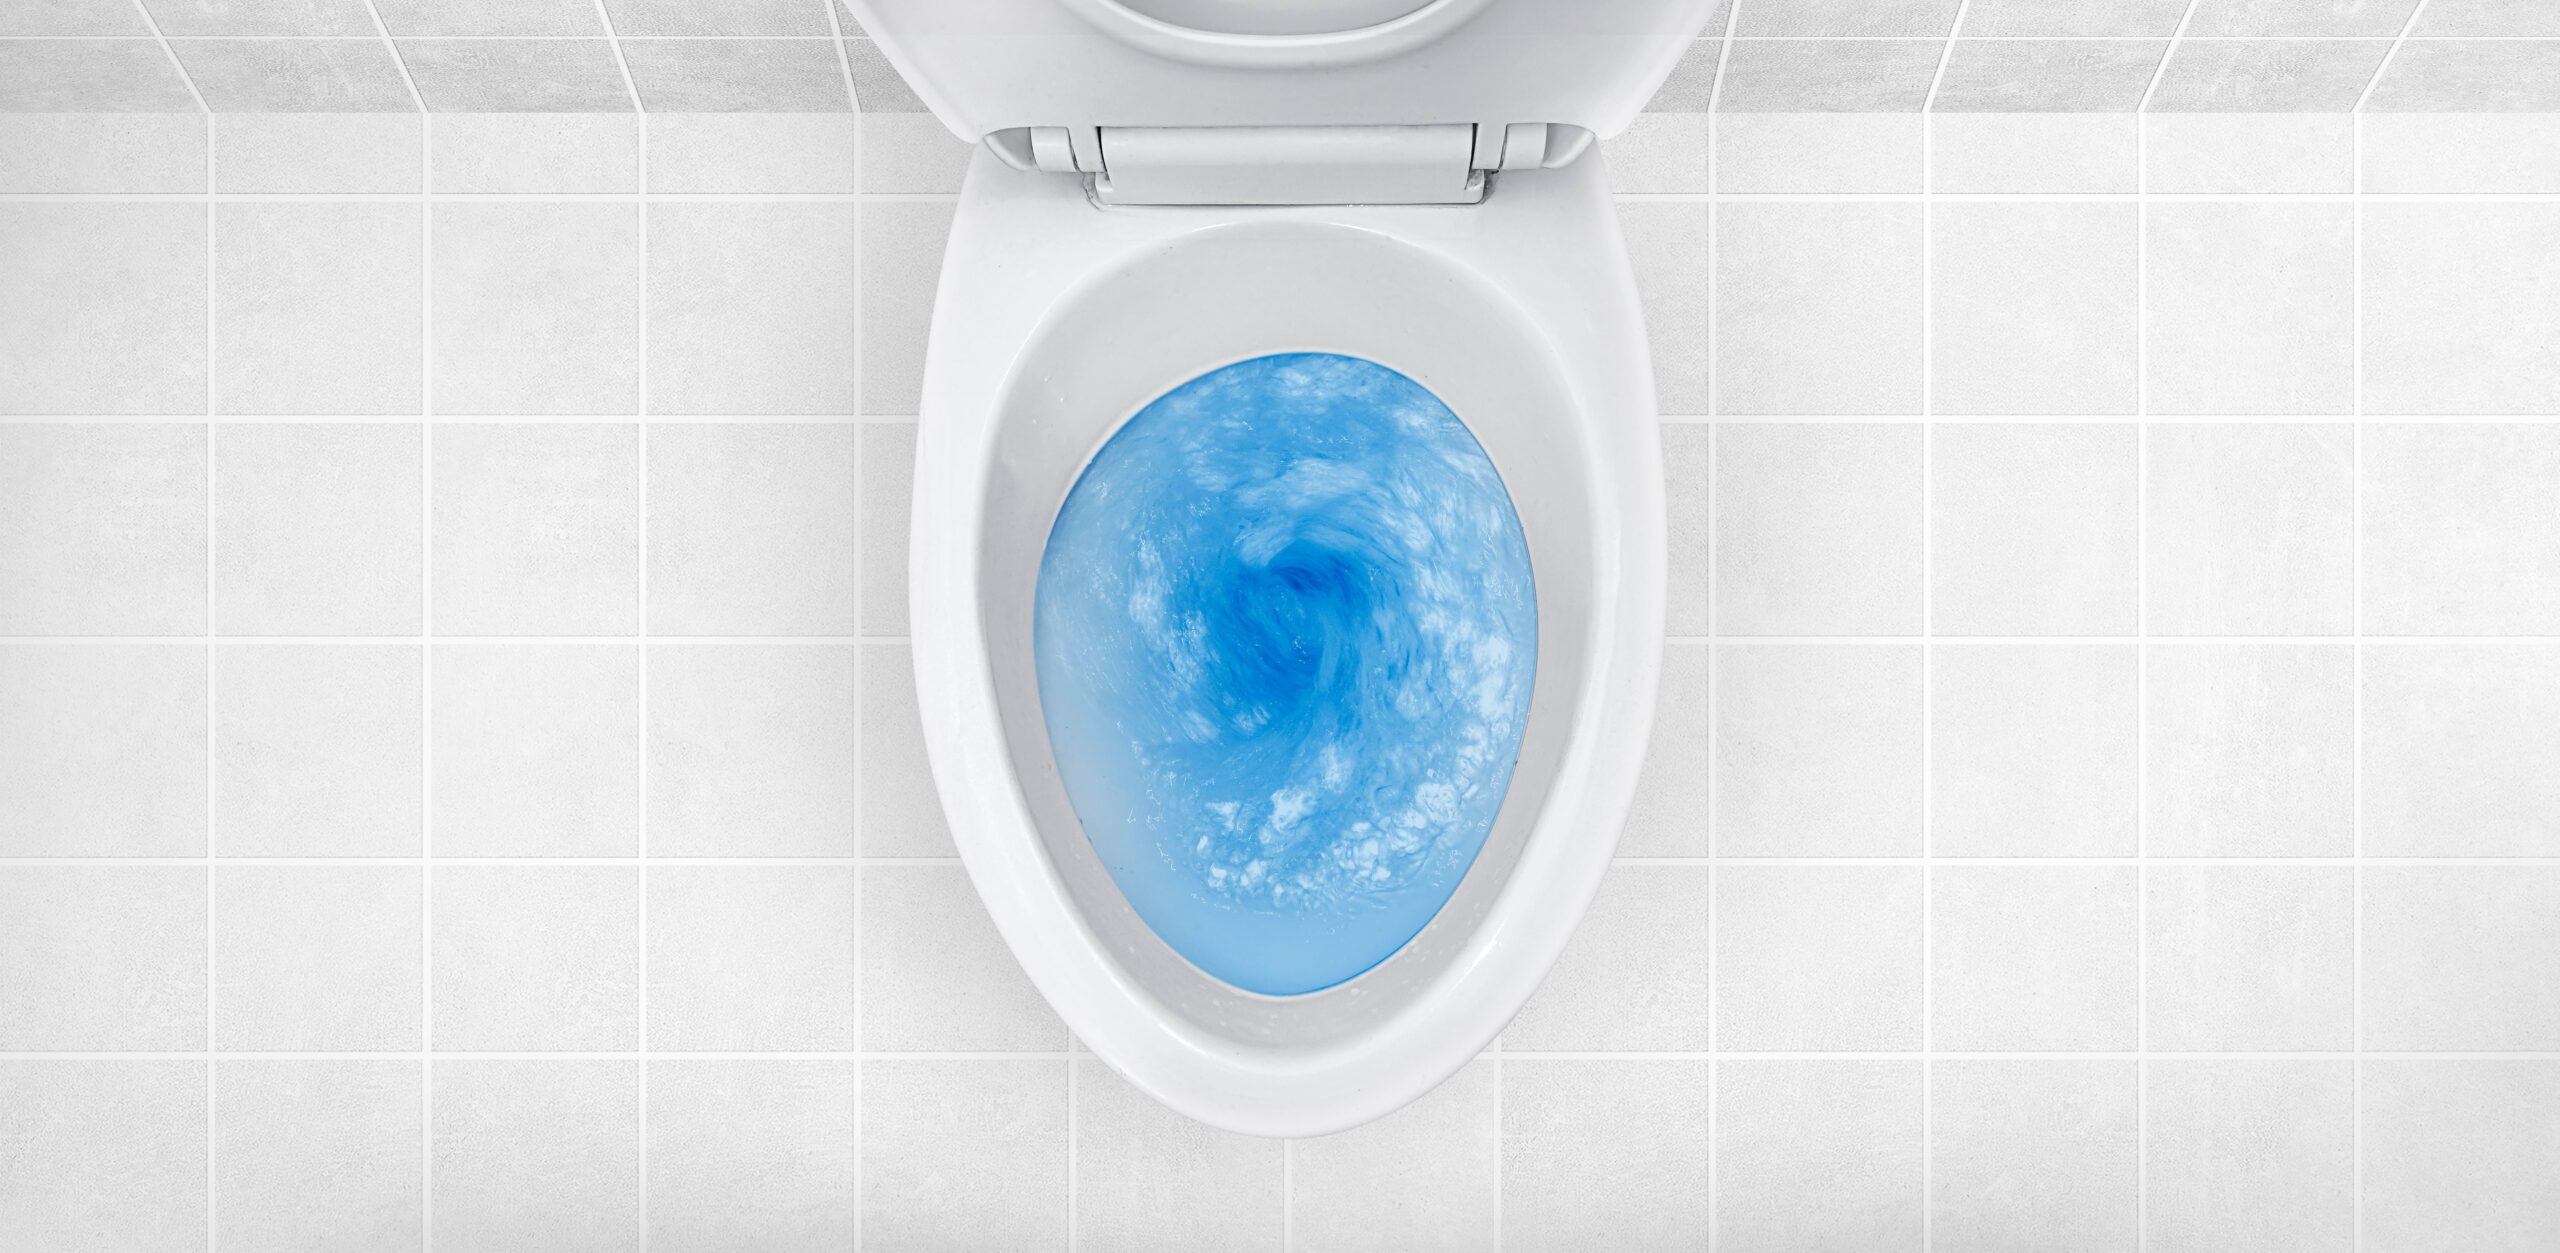 <span class="title">トイレの詰まりを改善する方法とは？つまりの原因と対処法を解説！</span>